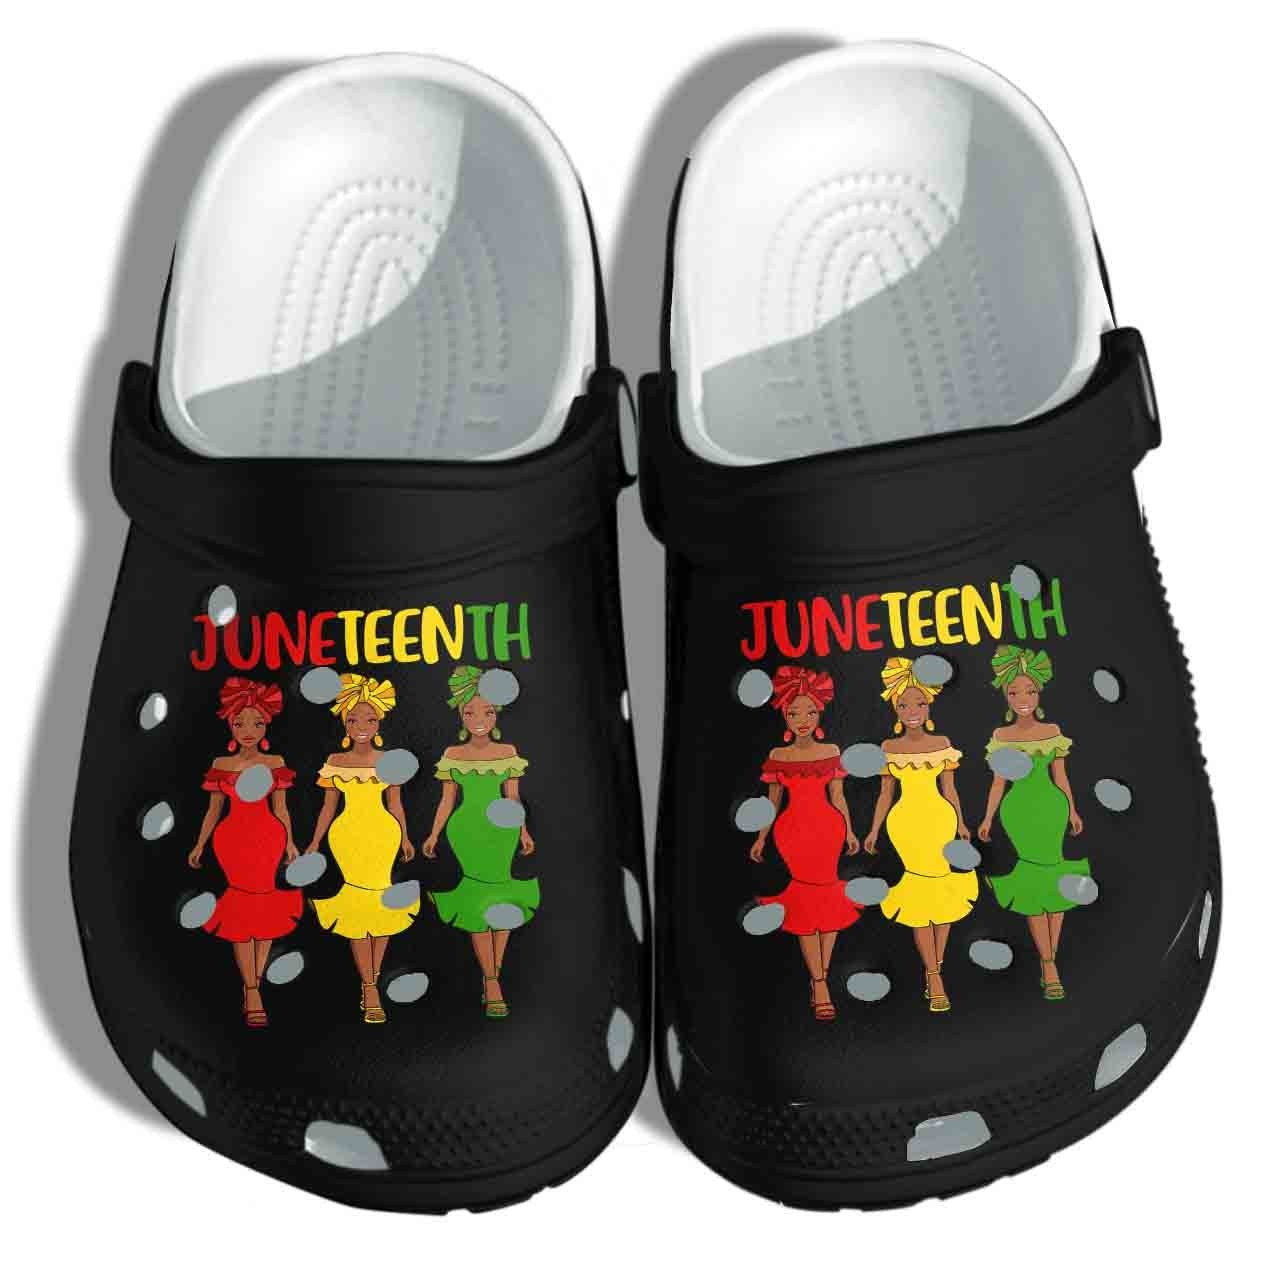 Juneteenth Melanin Custom Crocs Shoes Clogs - Black Women Beach Crocs Shoes Clogs